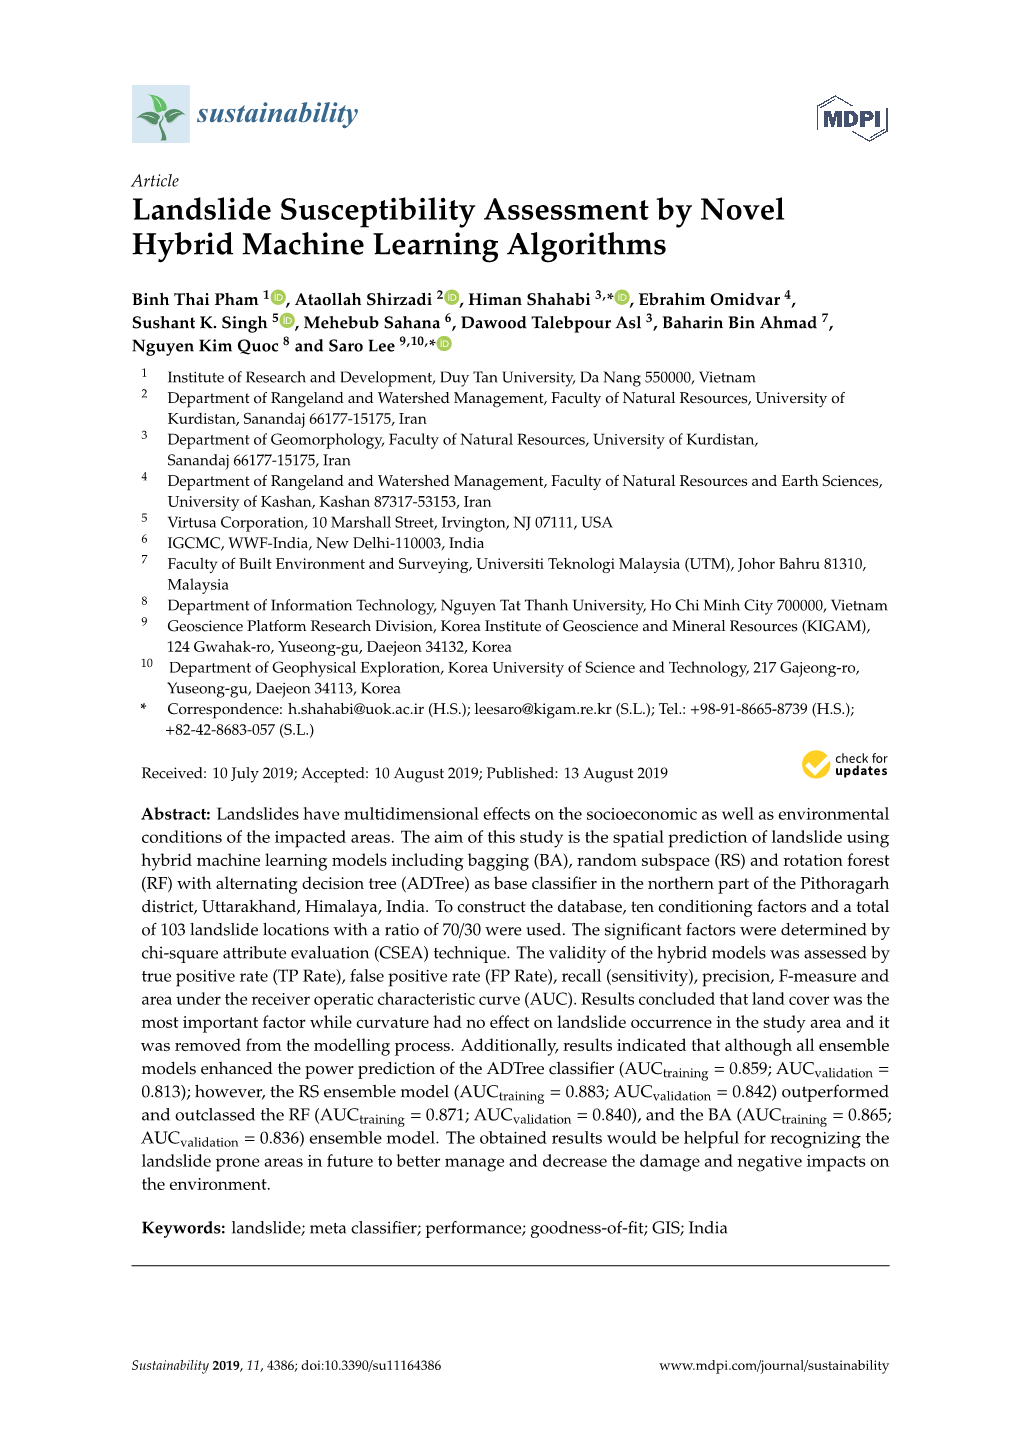 Landslide Susceptibility Assessment by Novel Hybrid Machine Learning Algorithms